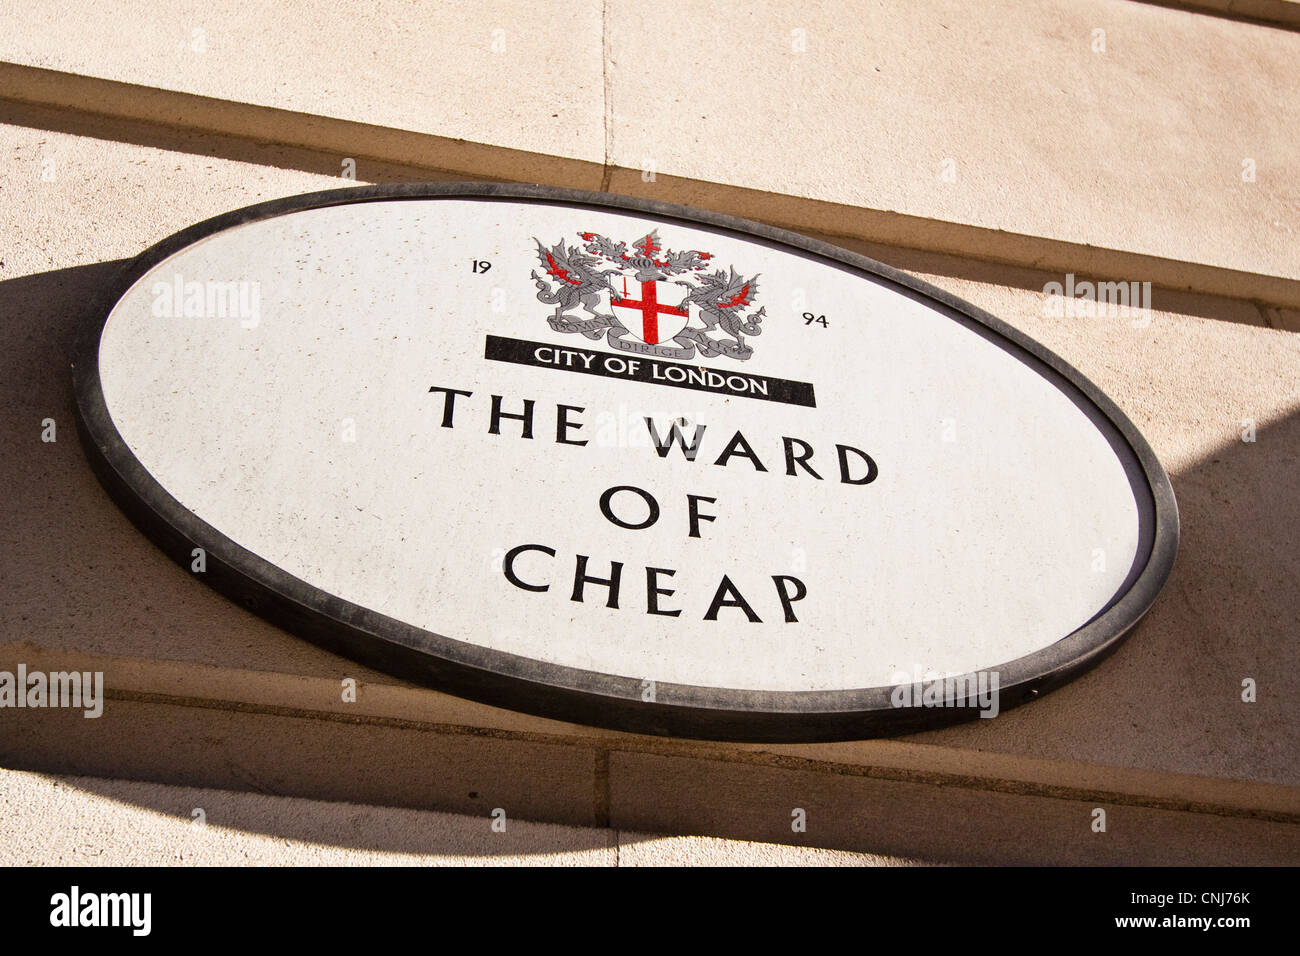 City of London Ward Cheap sign Stock Photo